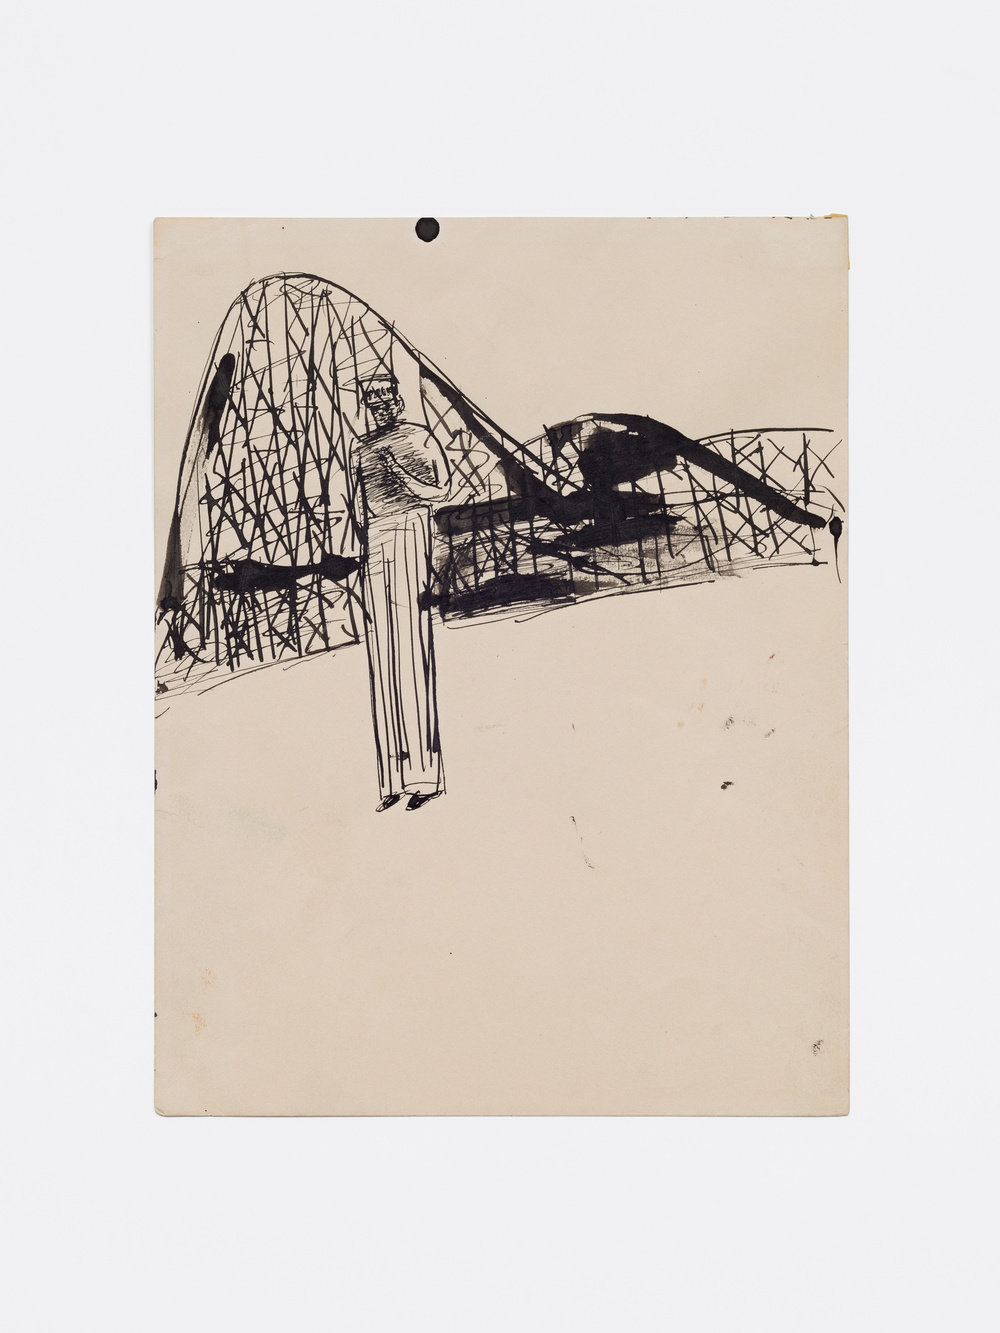 Grooms, roller coaster, salisbury beach ii, 1958, ink on paper, 12 x 9 in., 30.5 x 22.9 cm, cnon 60.106 pierre le hors